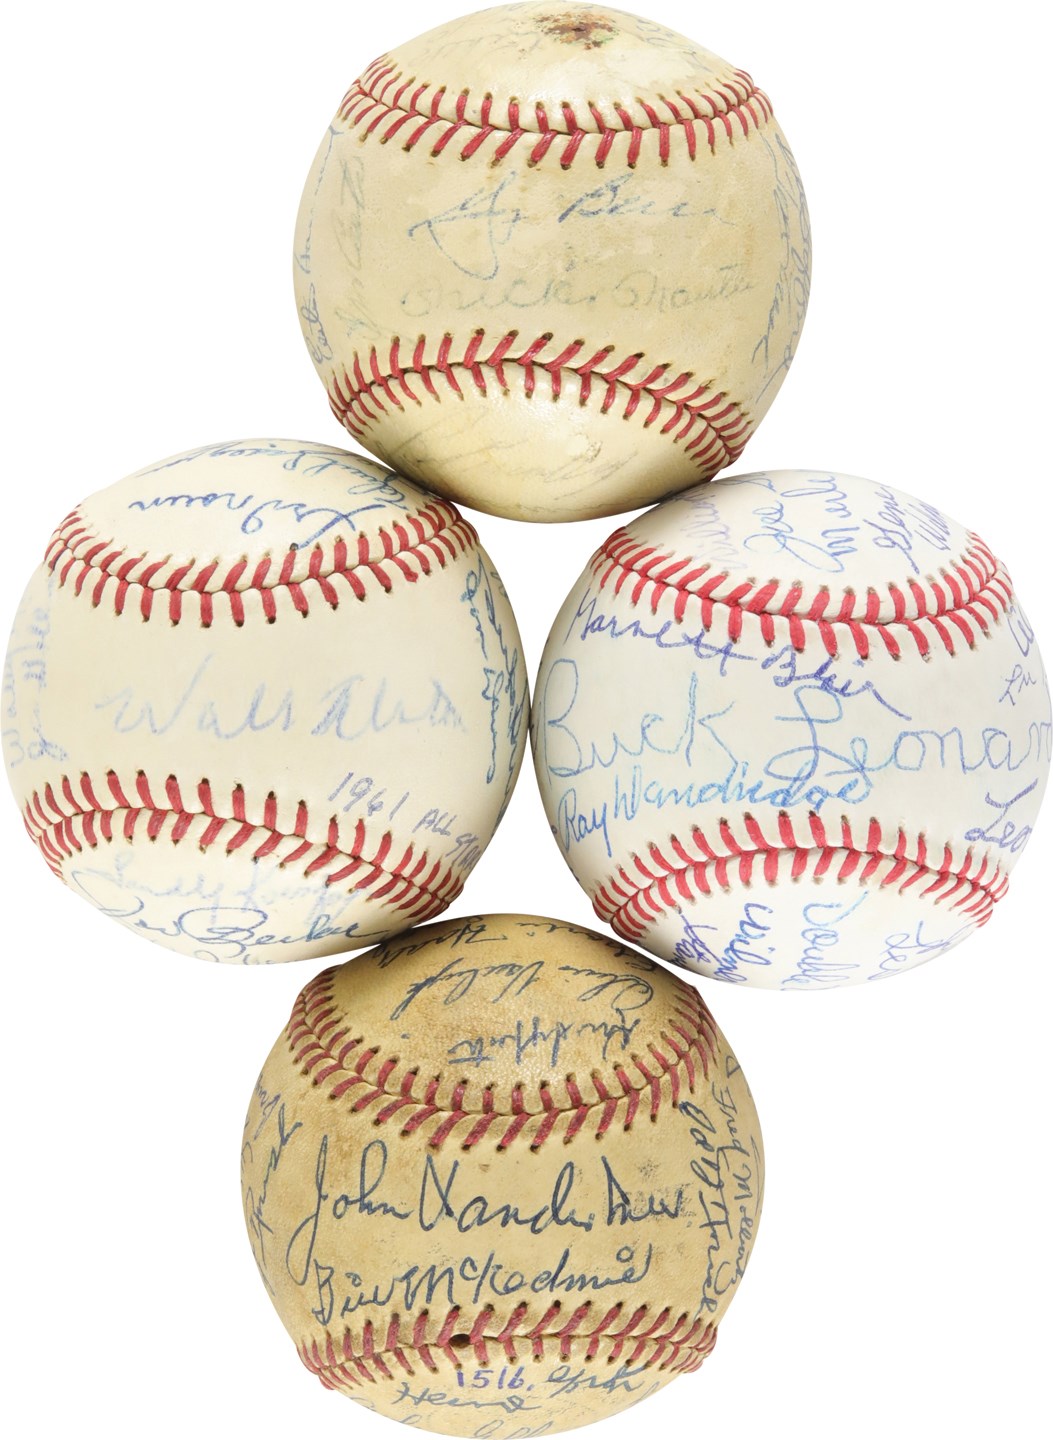 Mutli-Signed Baseball Collection w/HOFers & Stars (4)